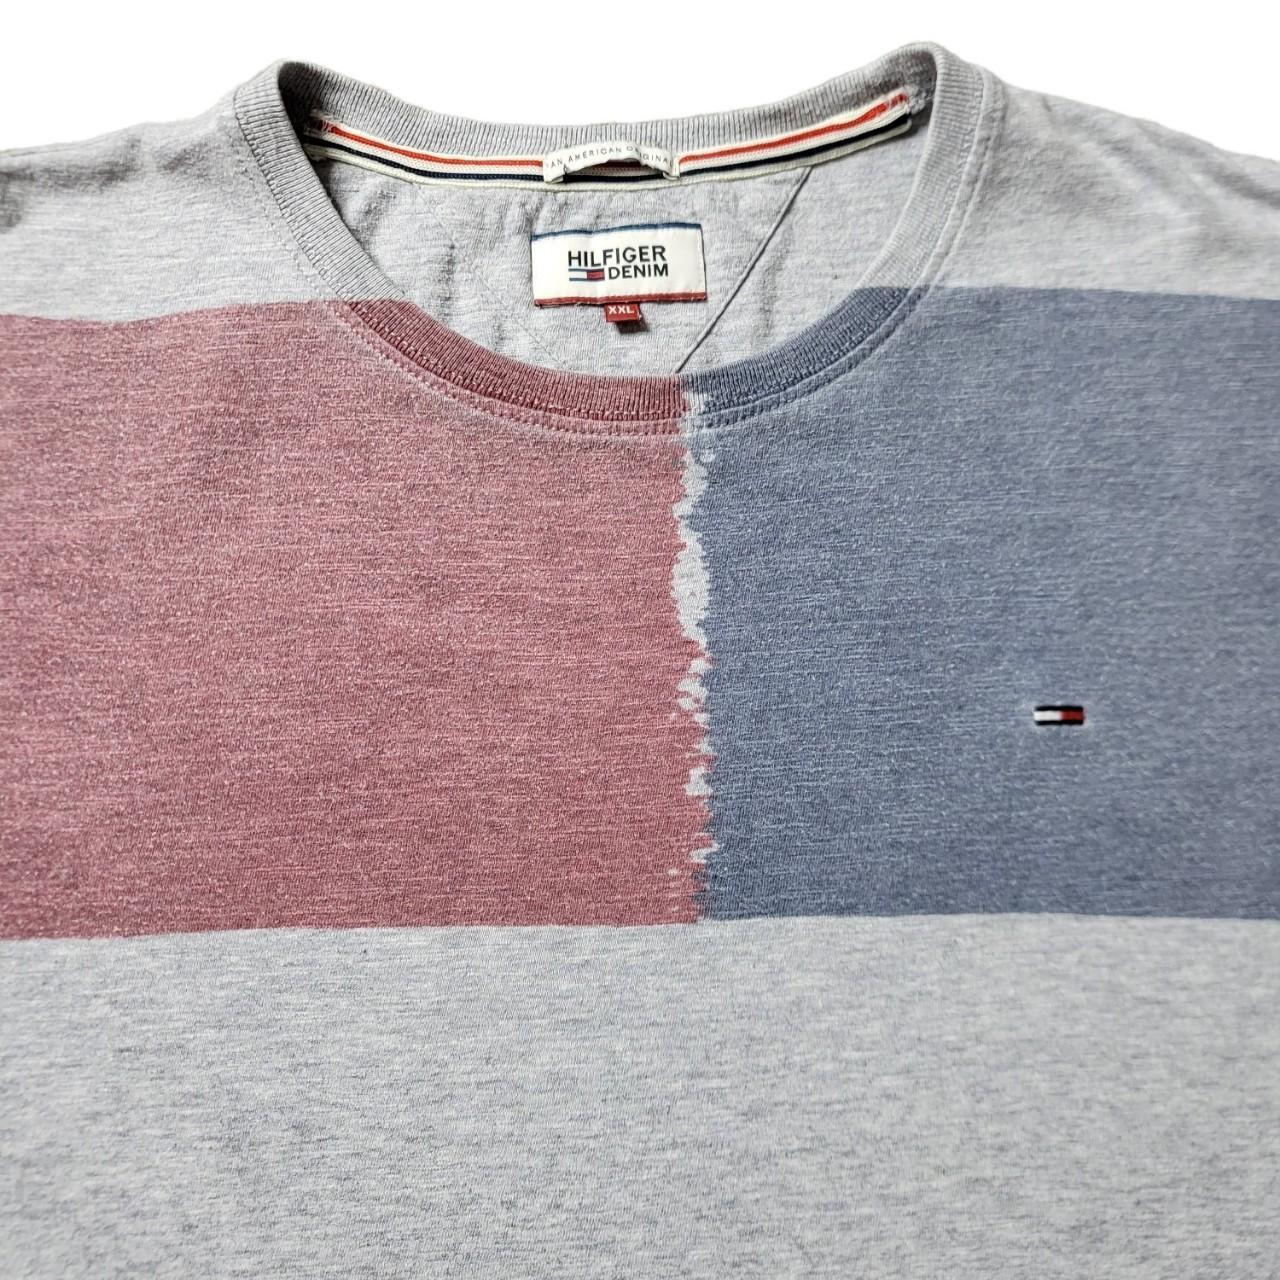 Hilfiger denim, tshirt in grey with red and blue... - Depop